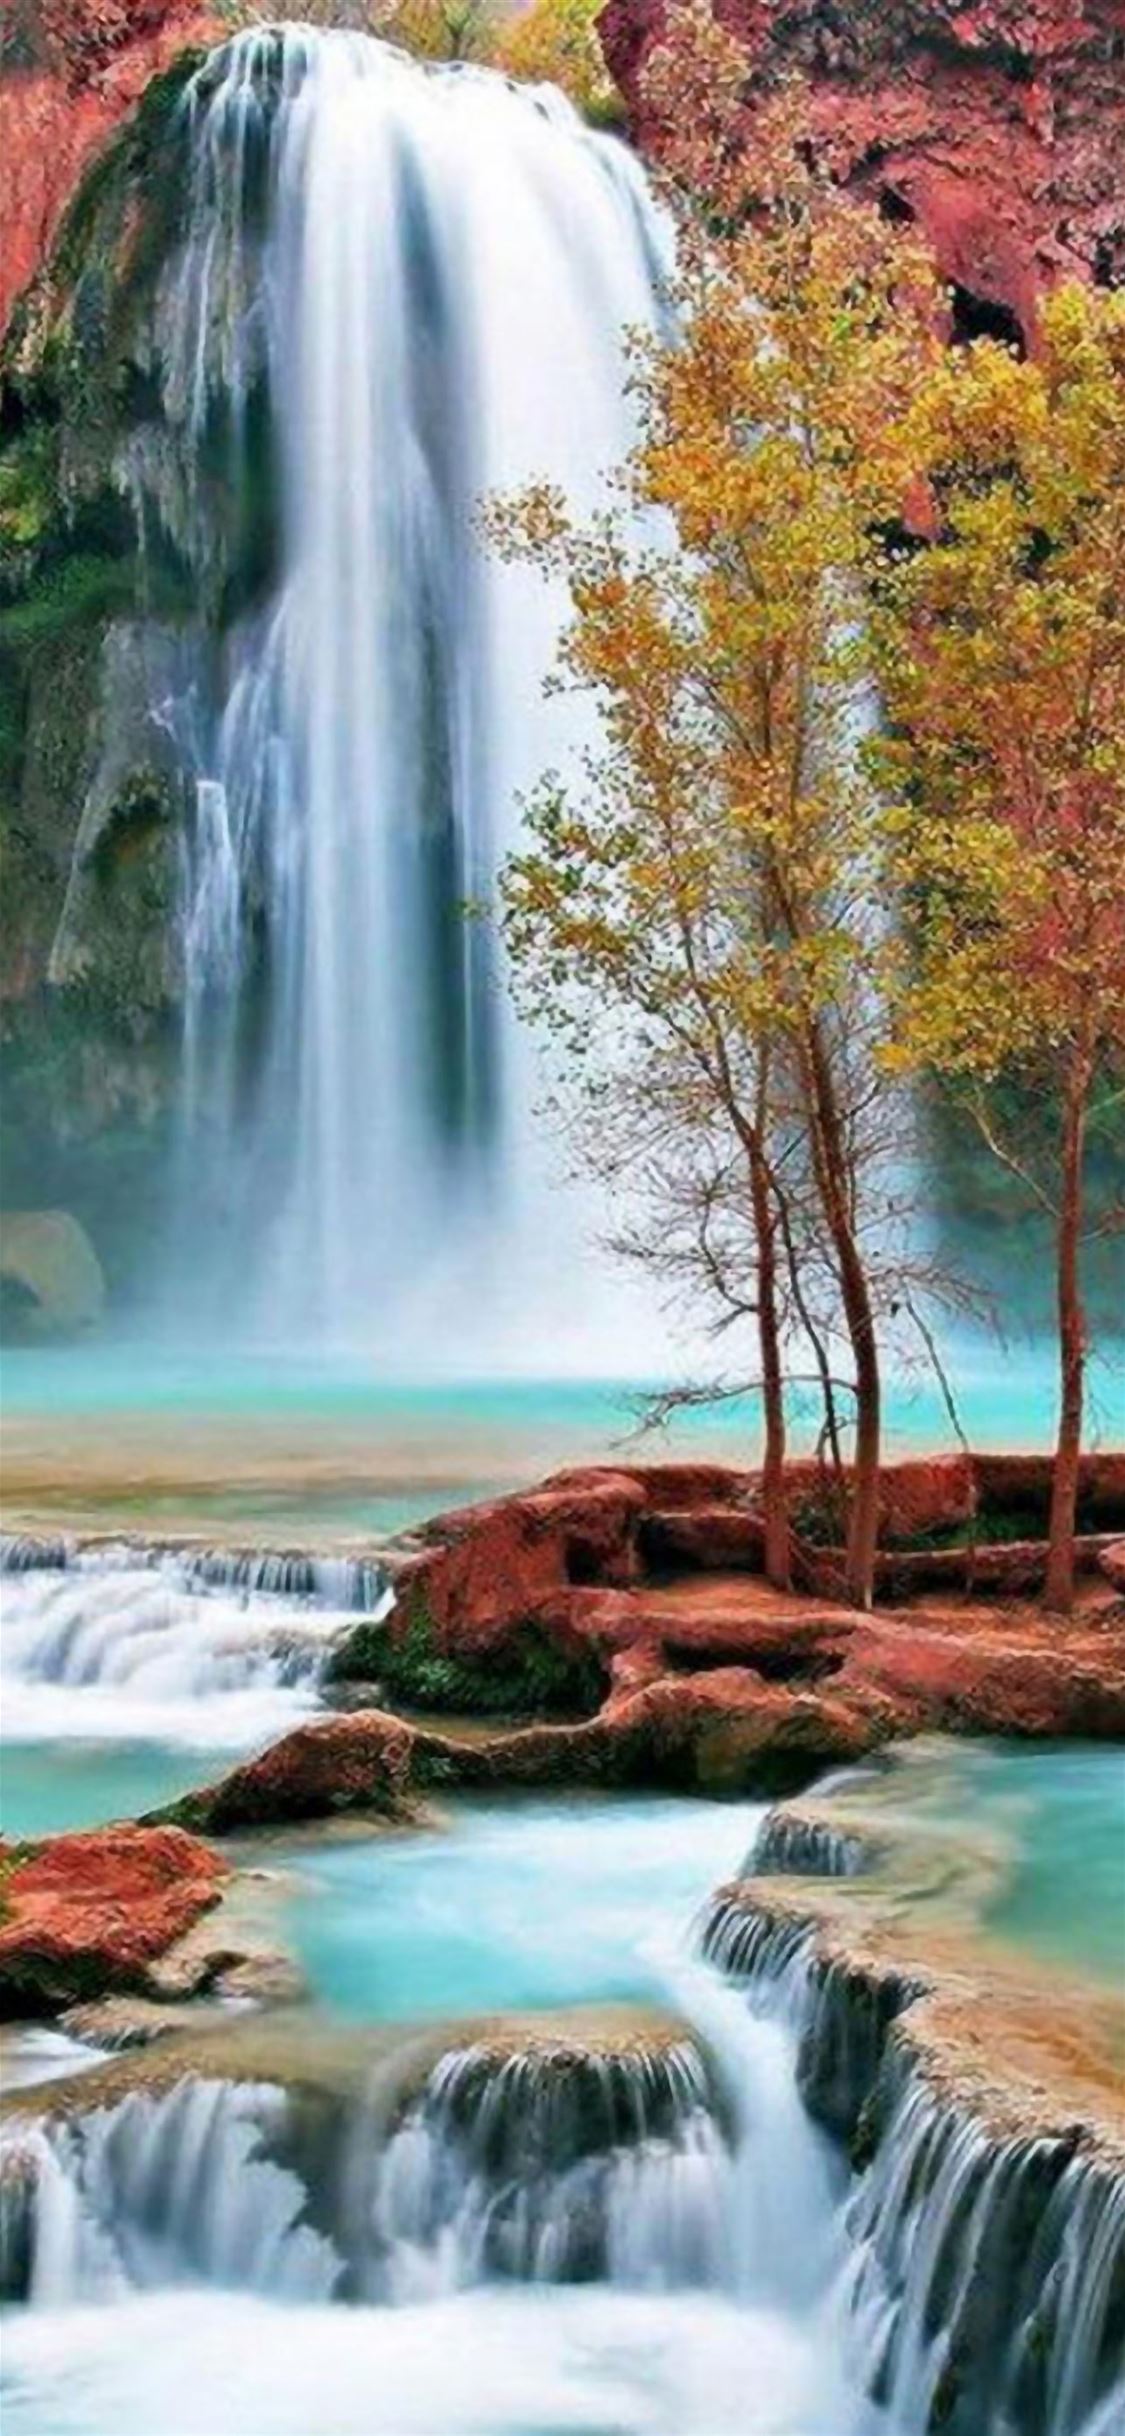 Autumn Waterfall Landscape iPhone wallpaper 